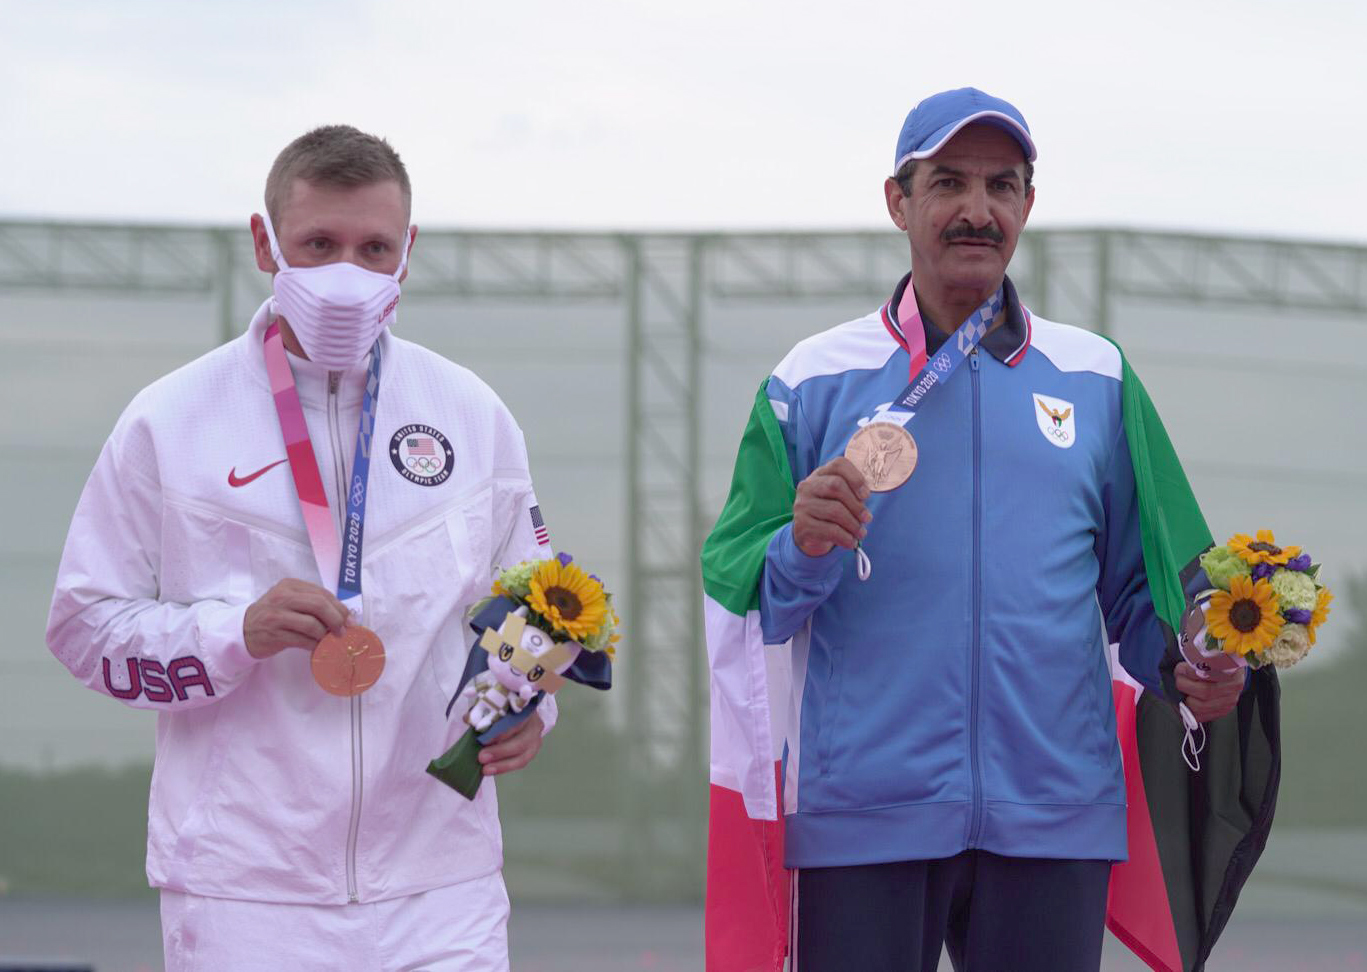 Kuwaiti men's skeet shooter Abdullah Al-Rashidi's bronze medal win at the Tokyo 2020 Olympics